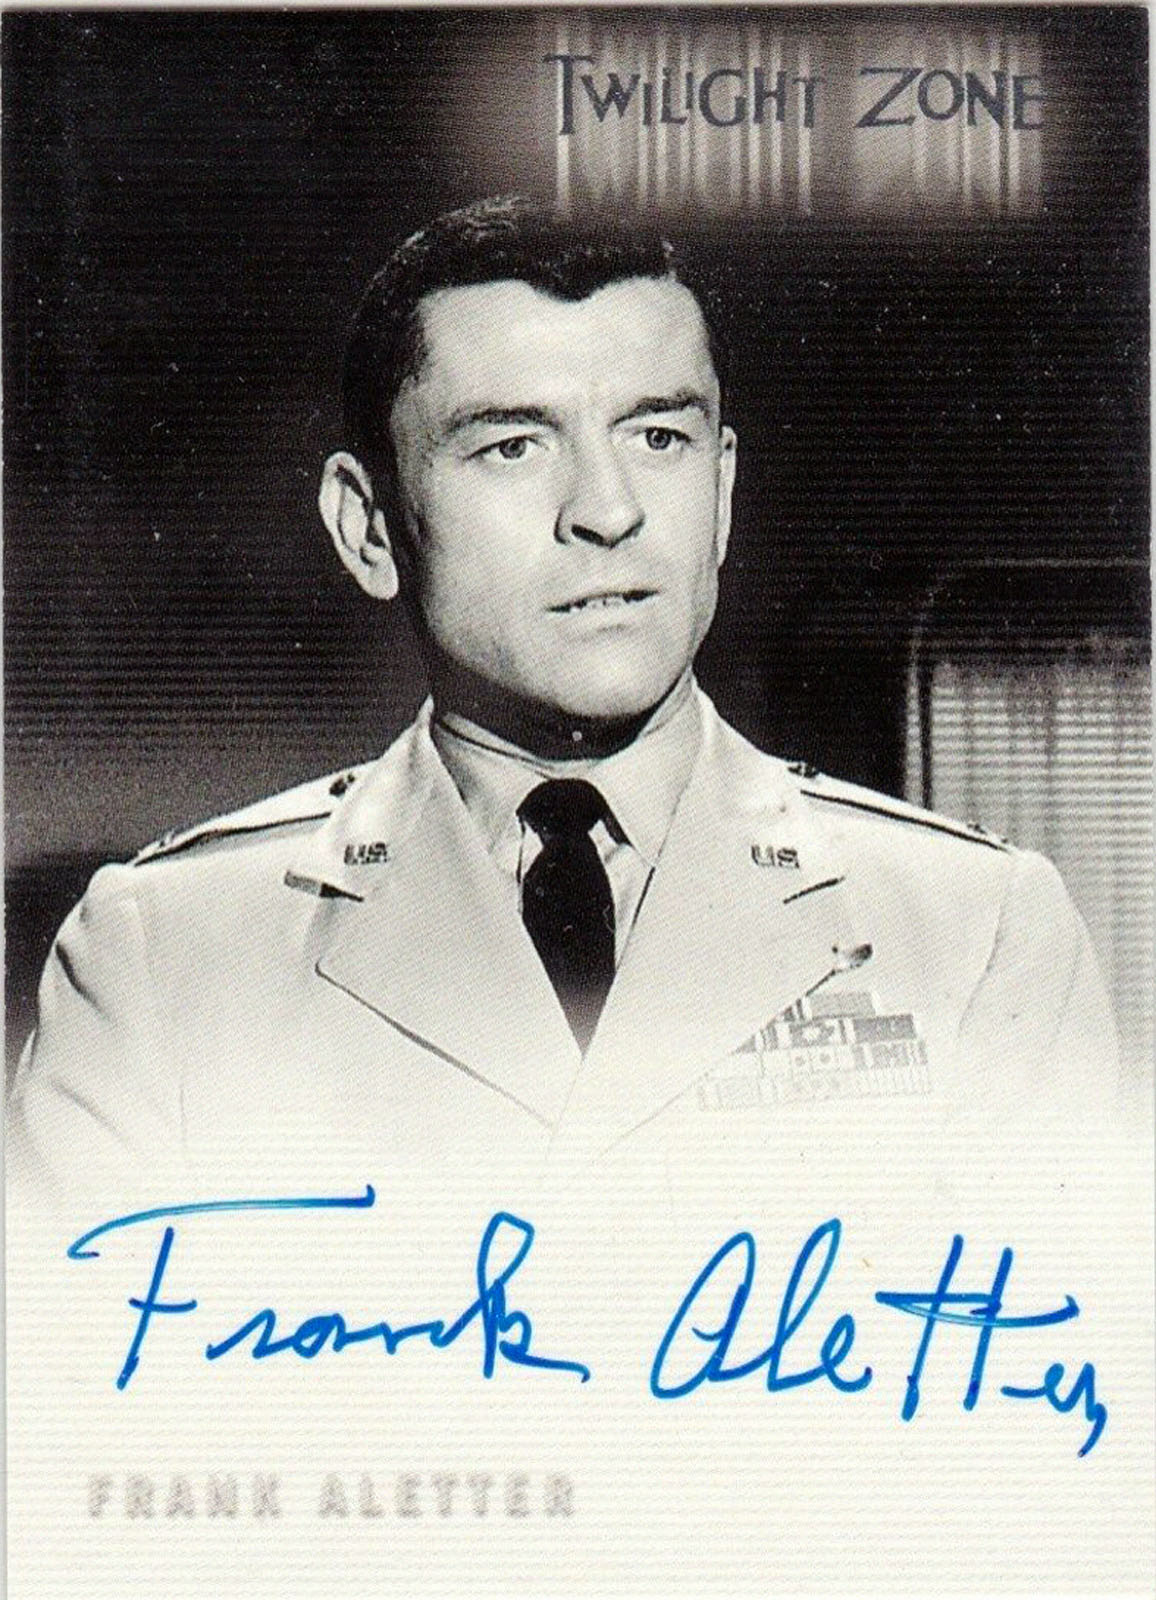 Frank Aletter